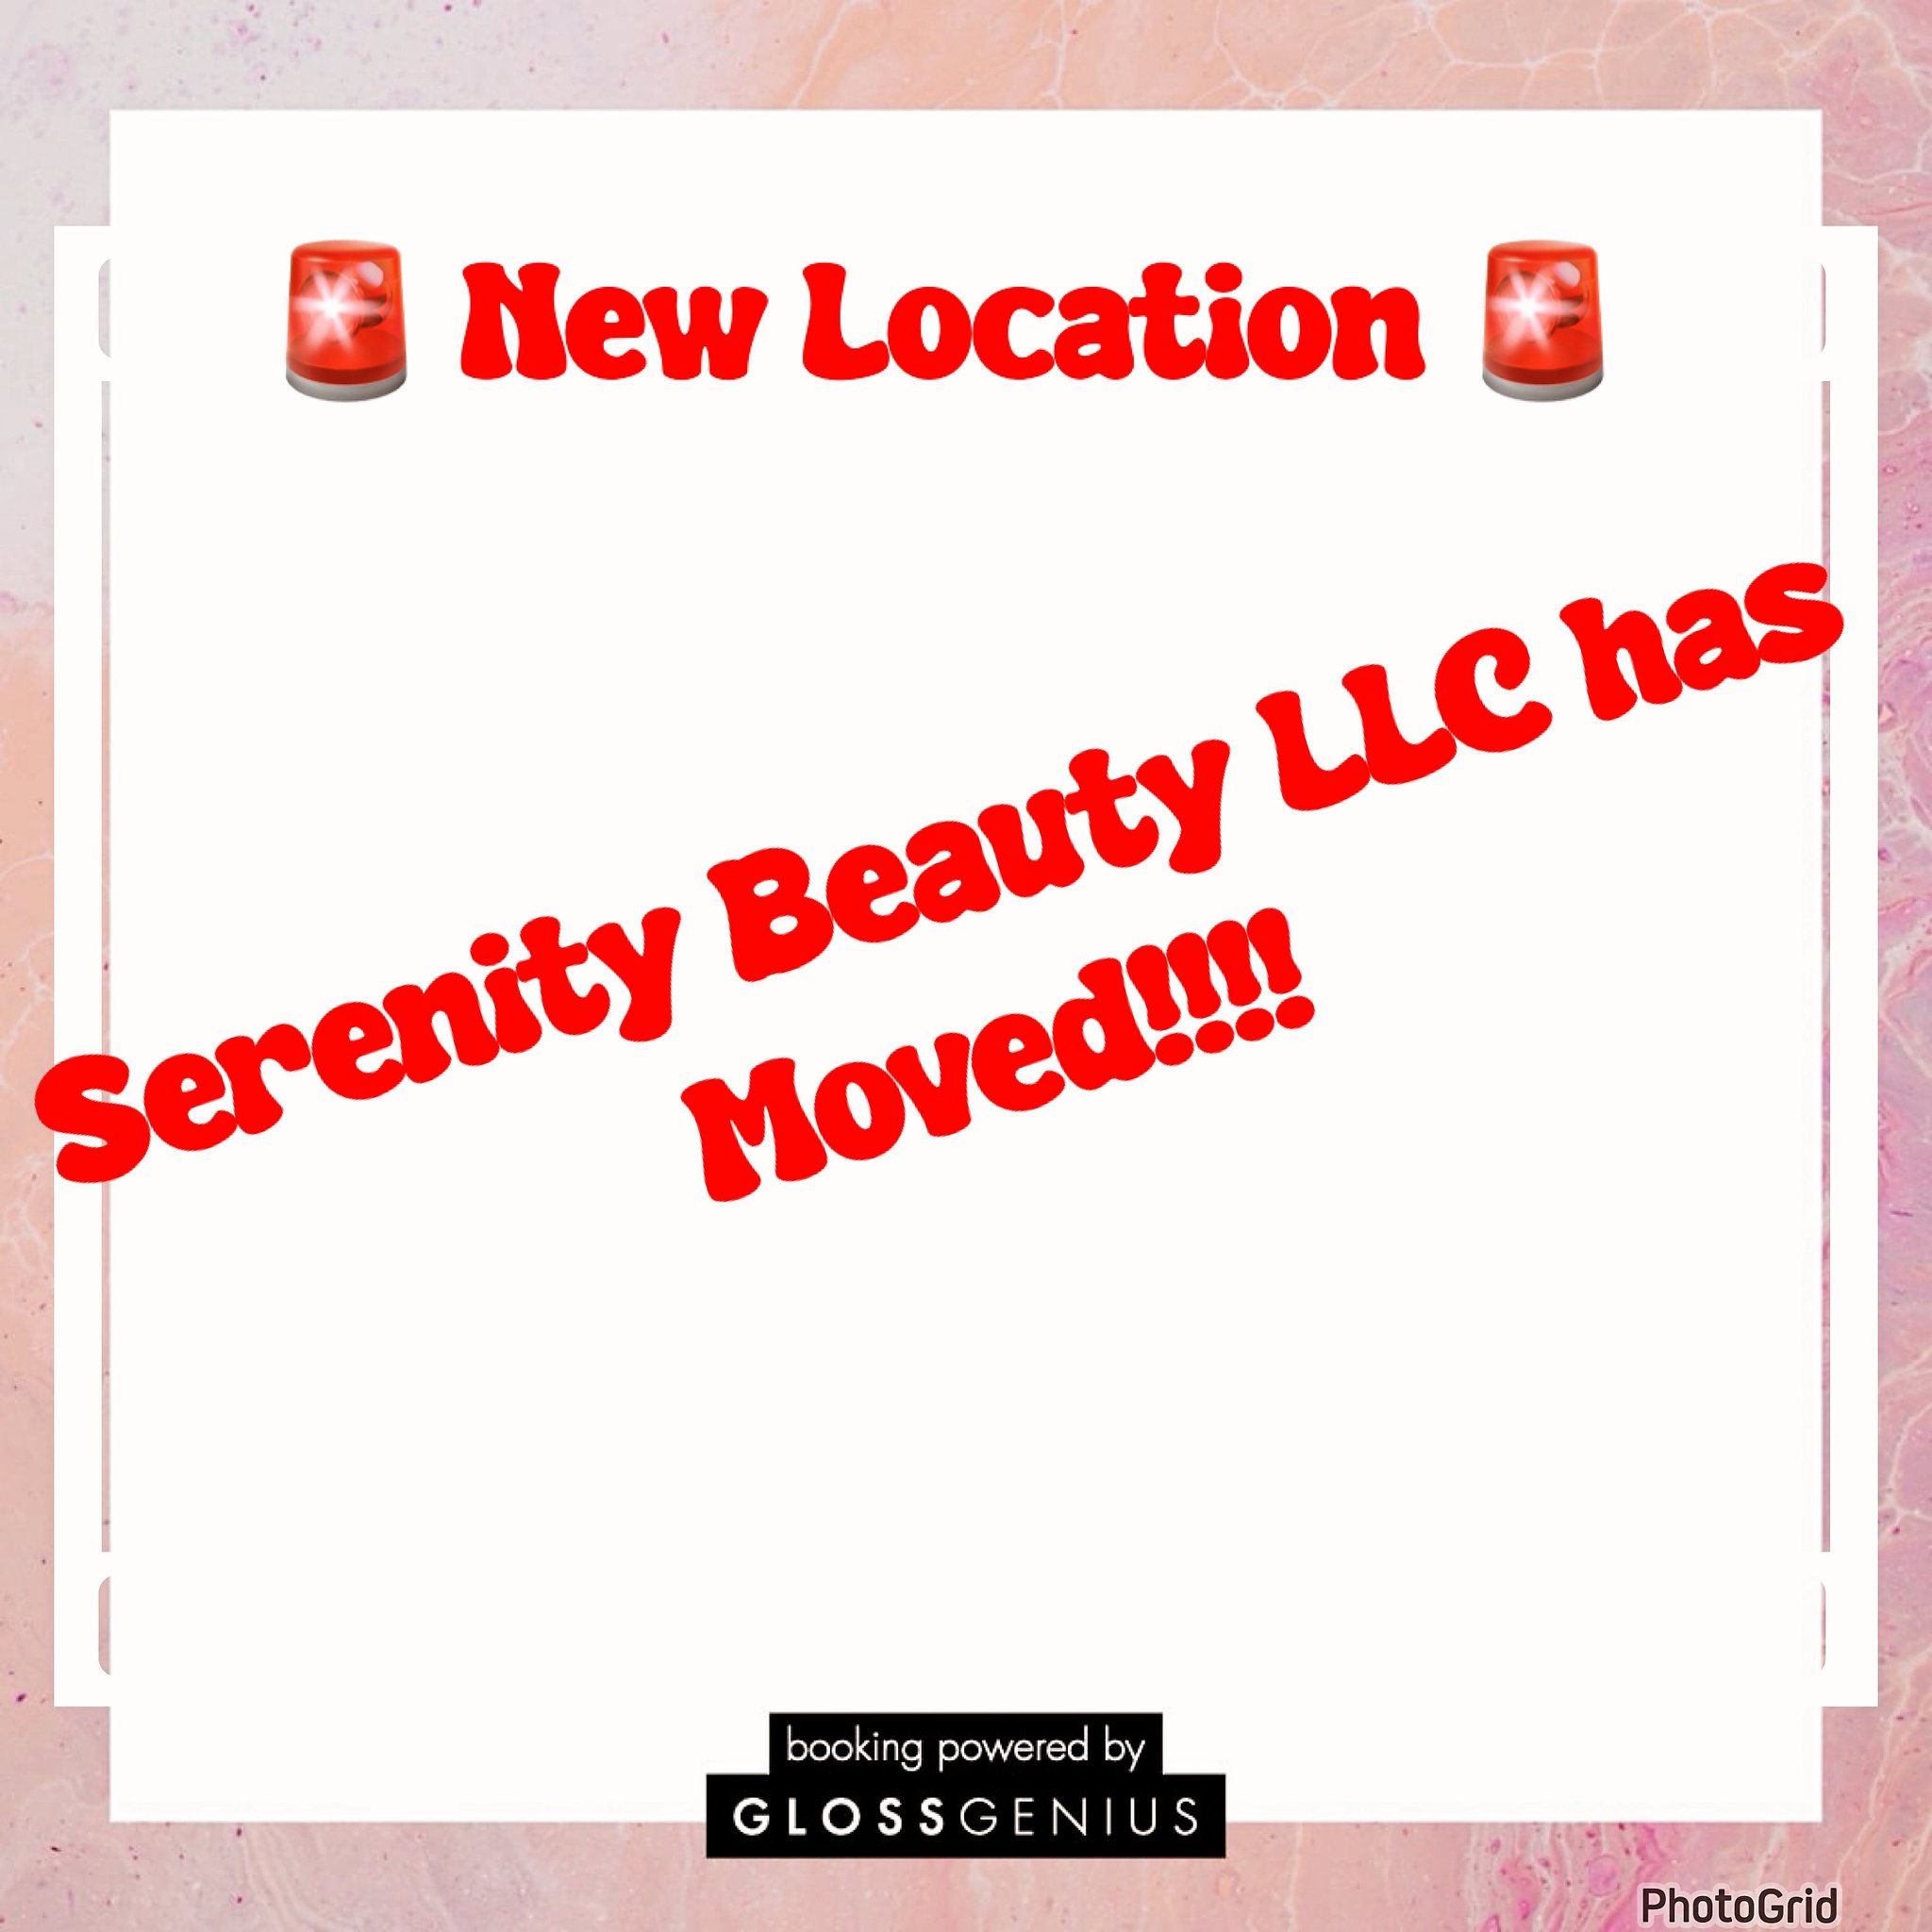 Serenity Beauty LLC